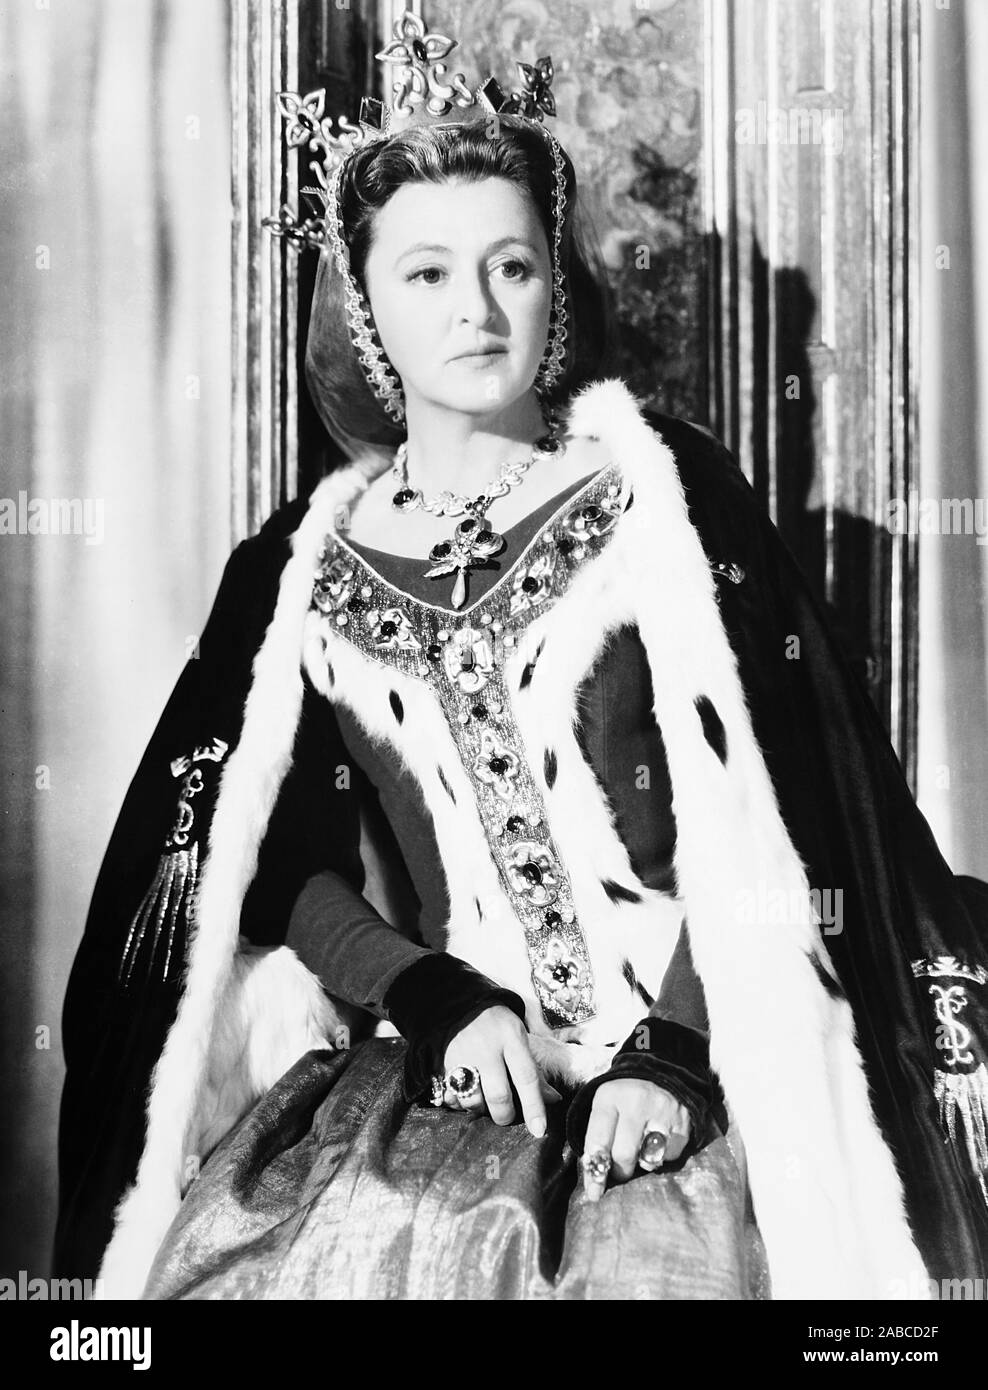 CHRISTOPHER COLUMBUS, Florence Edlridge as Queen Isabella, 1949 Stock Photo